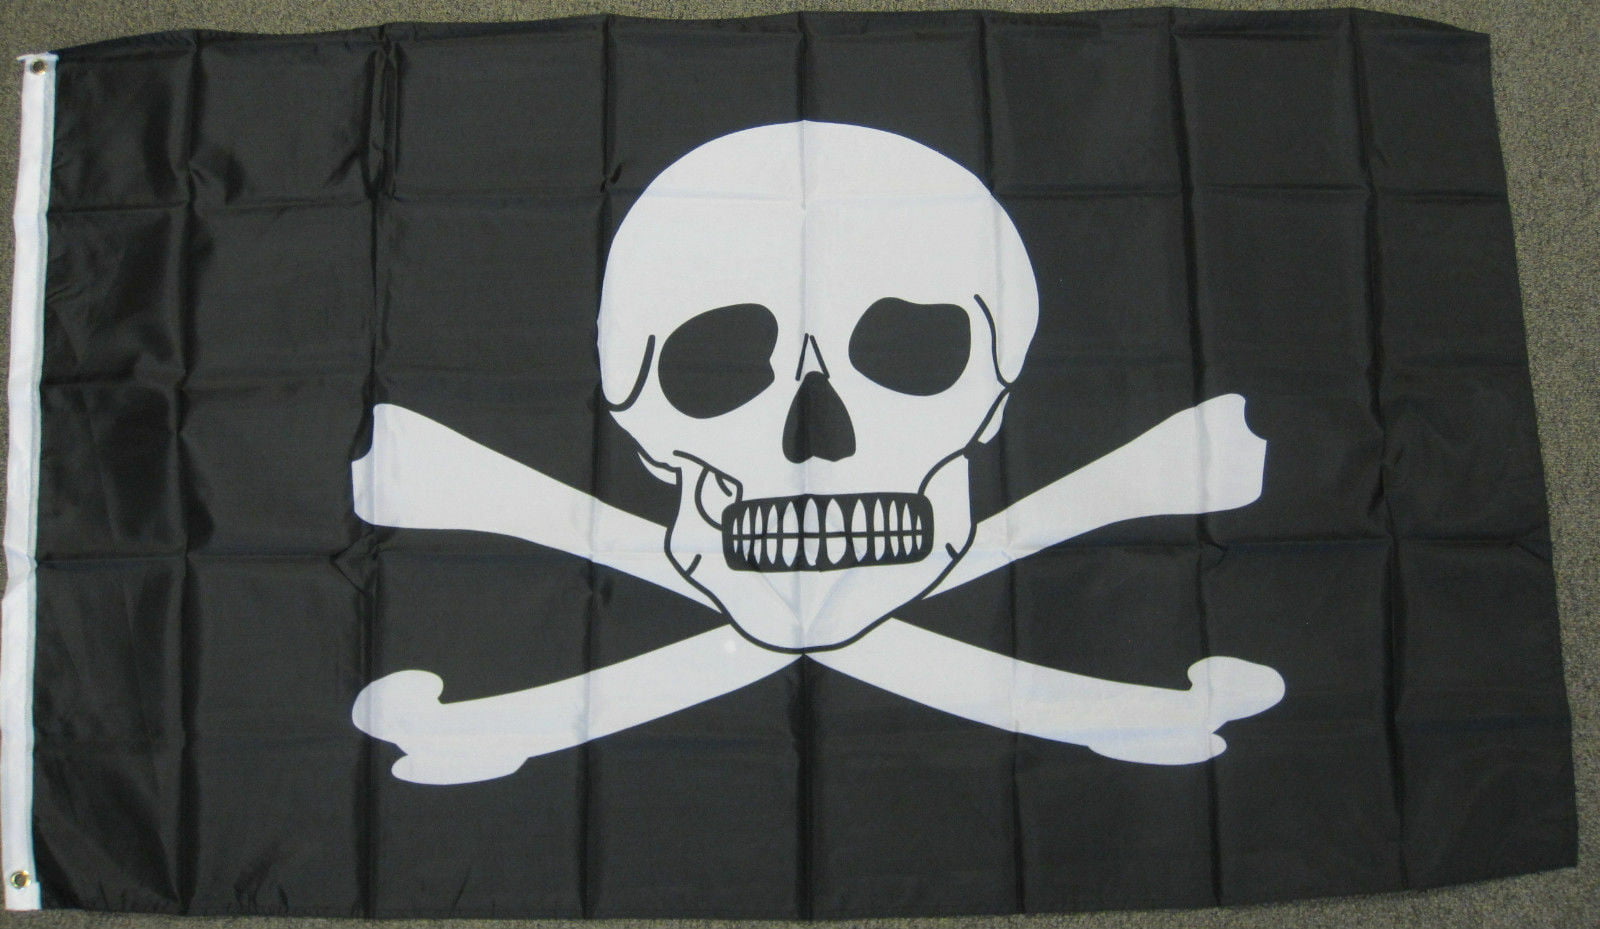 Ten fathoms deep pirate skull and crossbones Flag  5ft x 3ft 